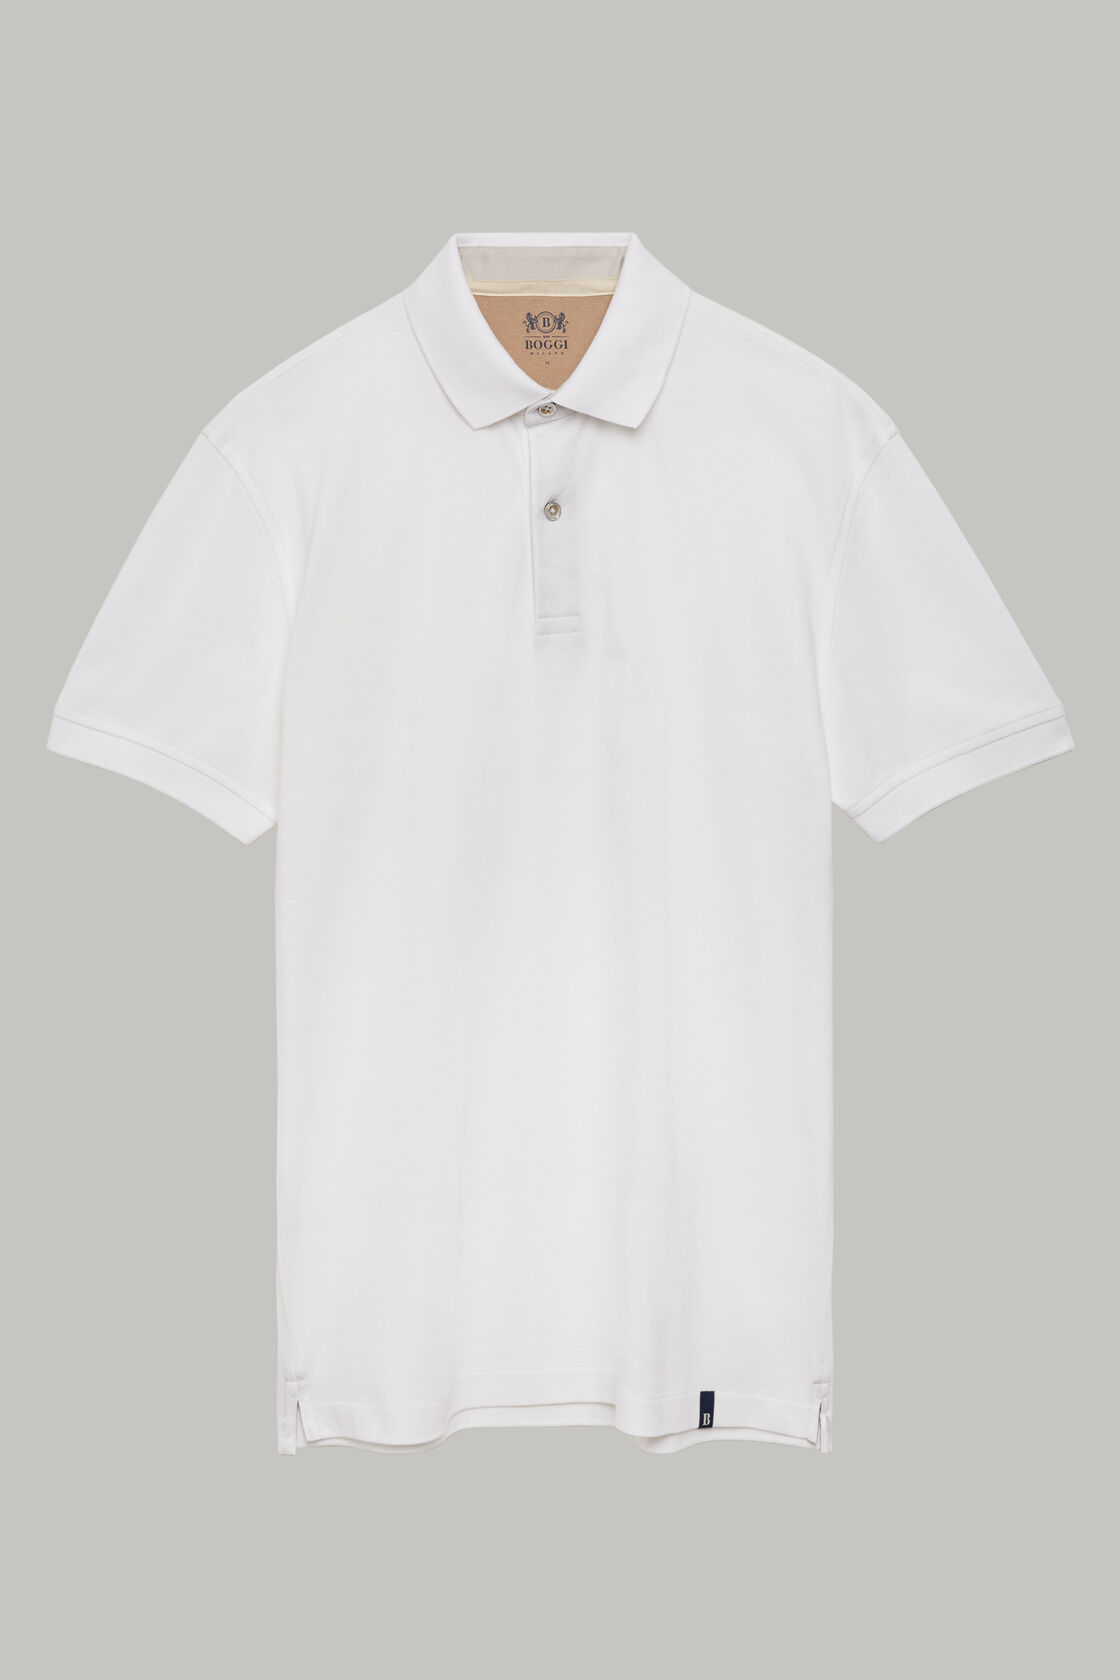 Regular fit cotton pique polo shirt, White, hi-res